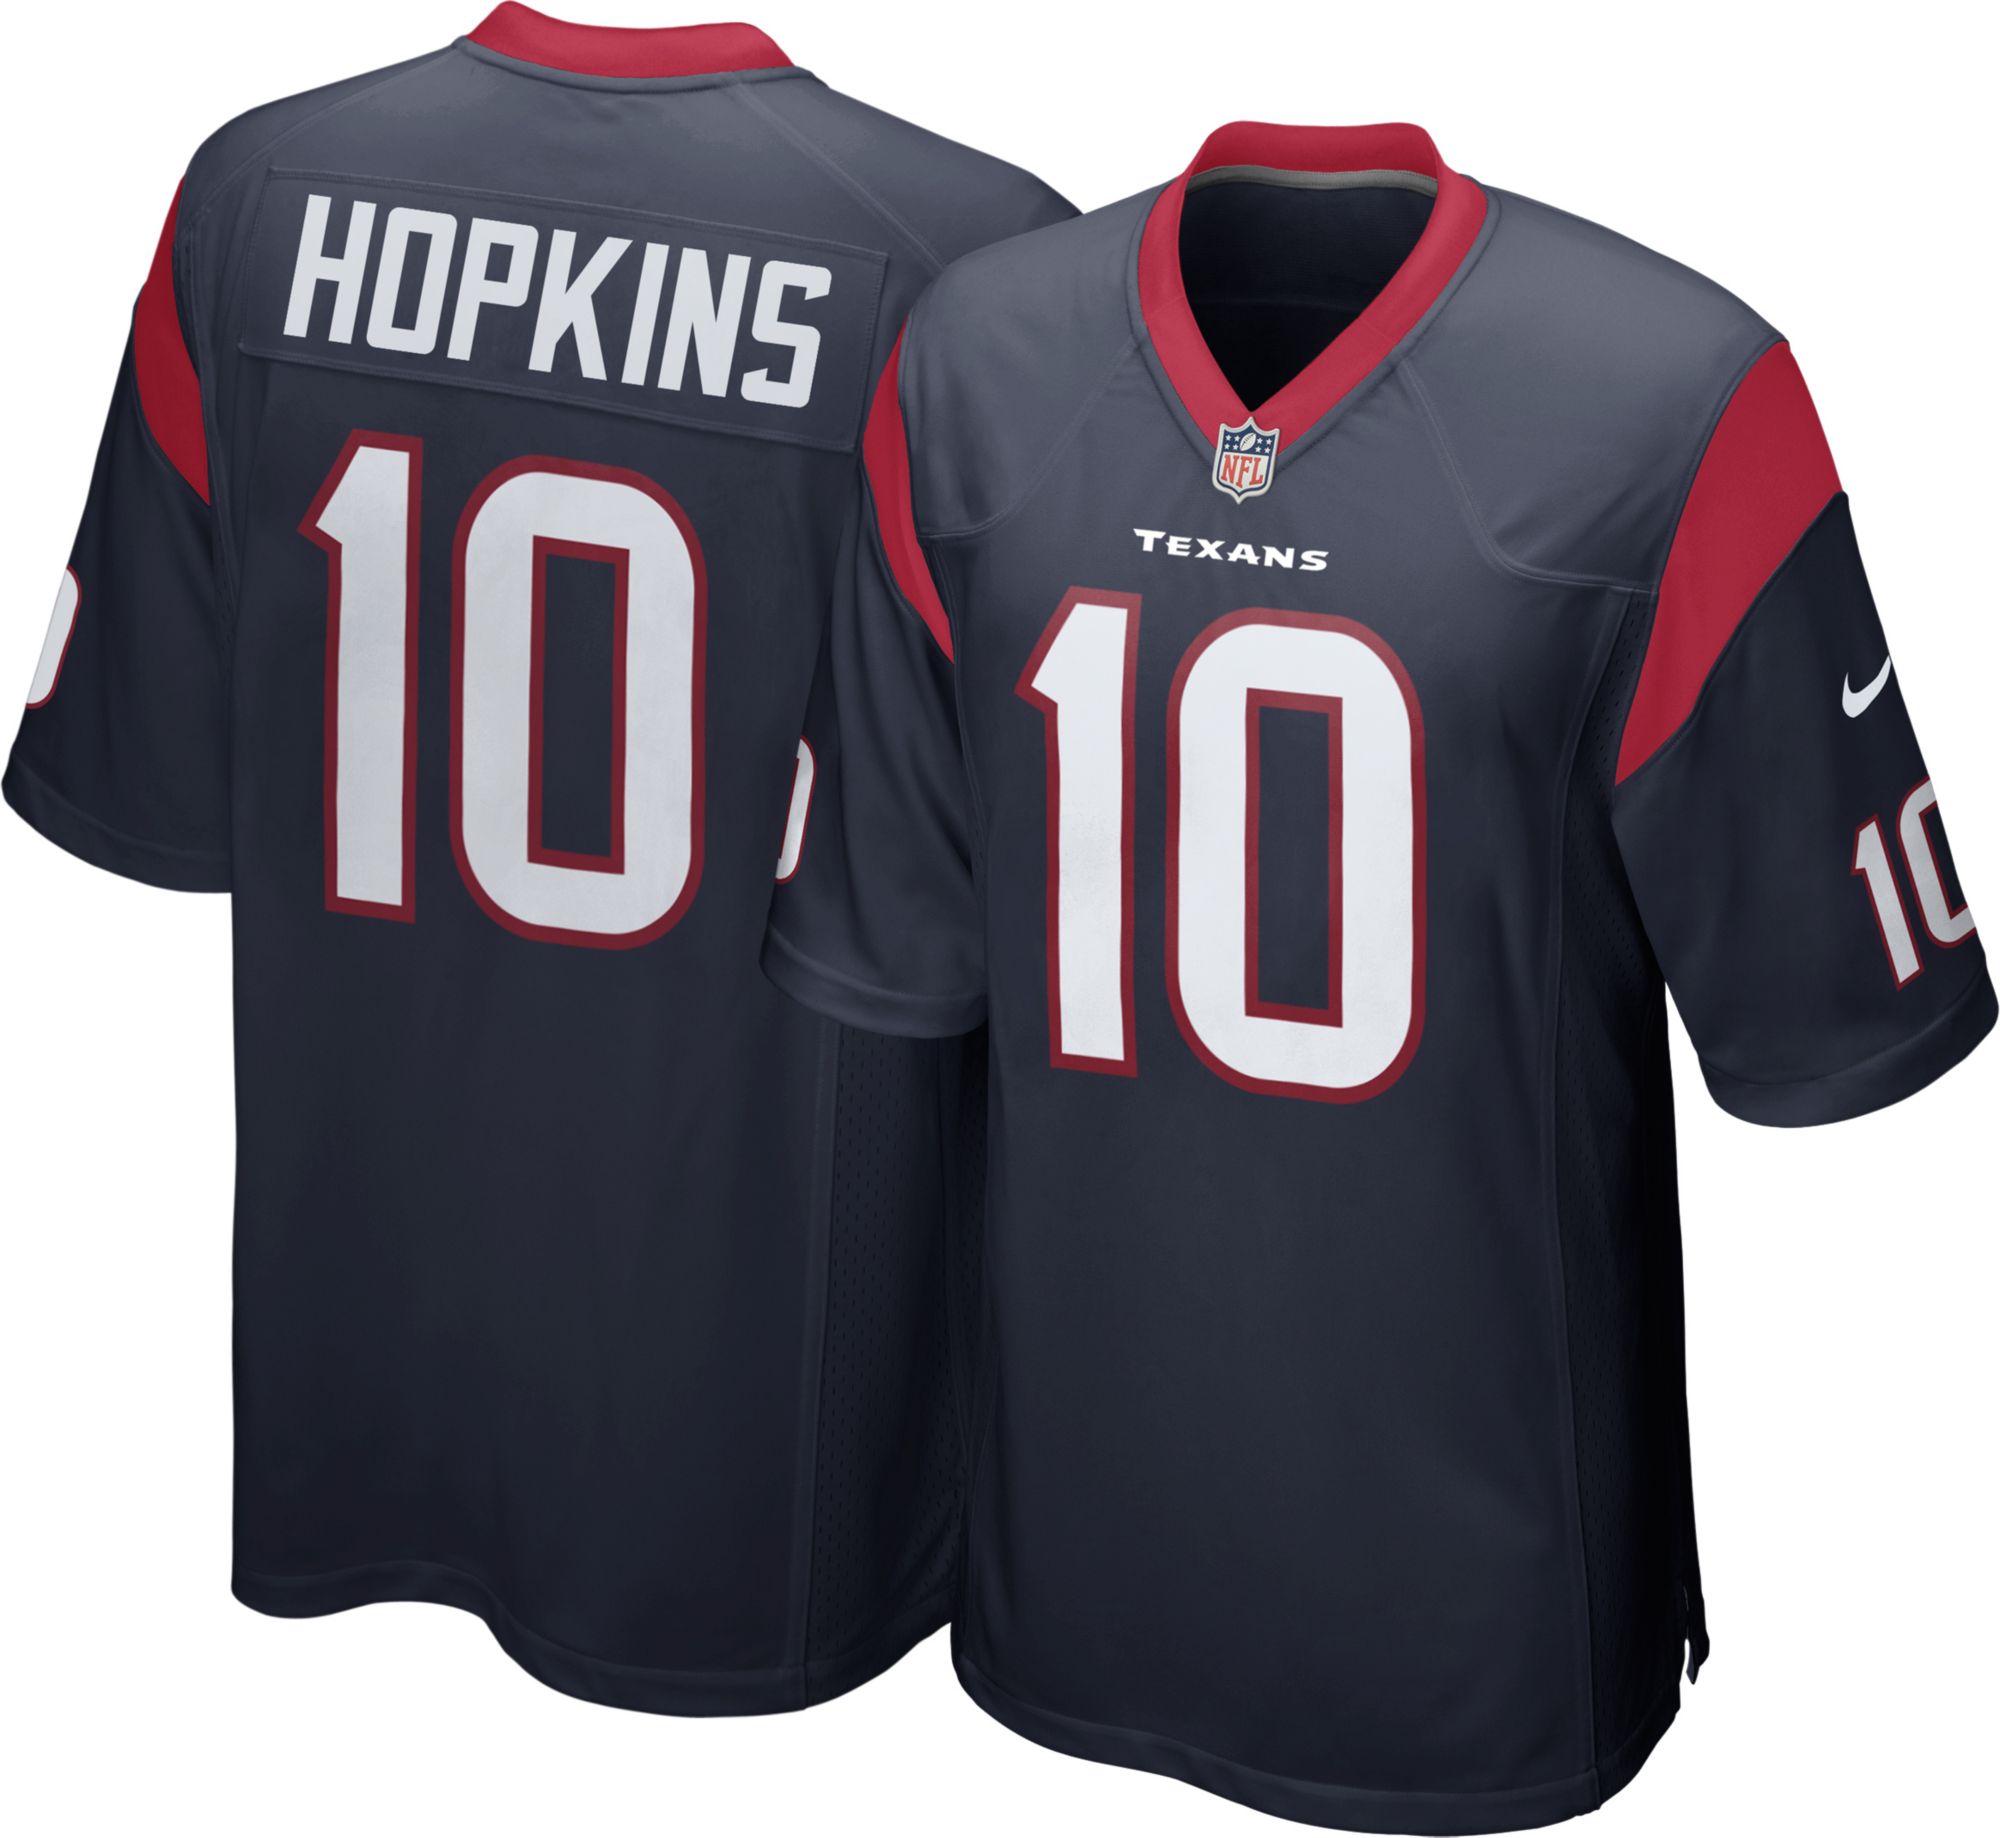 hopkins jersey